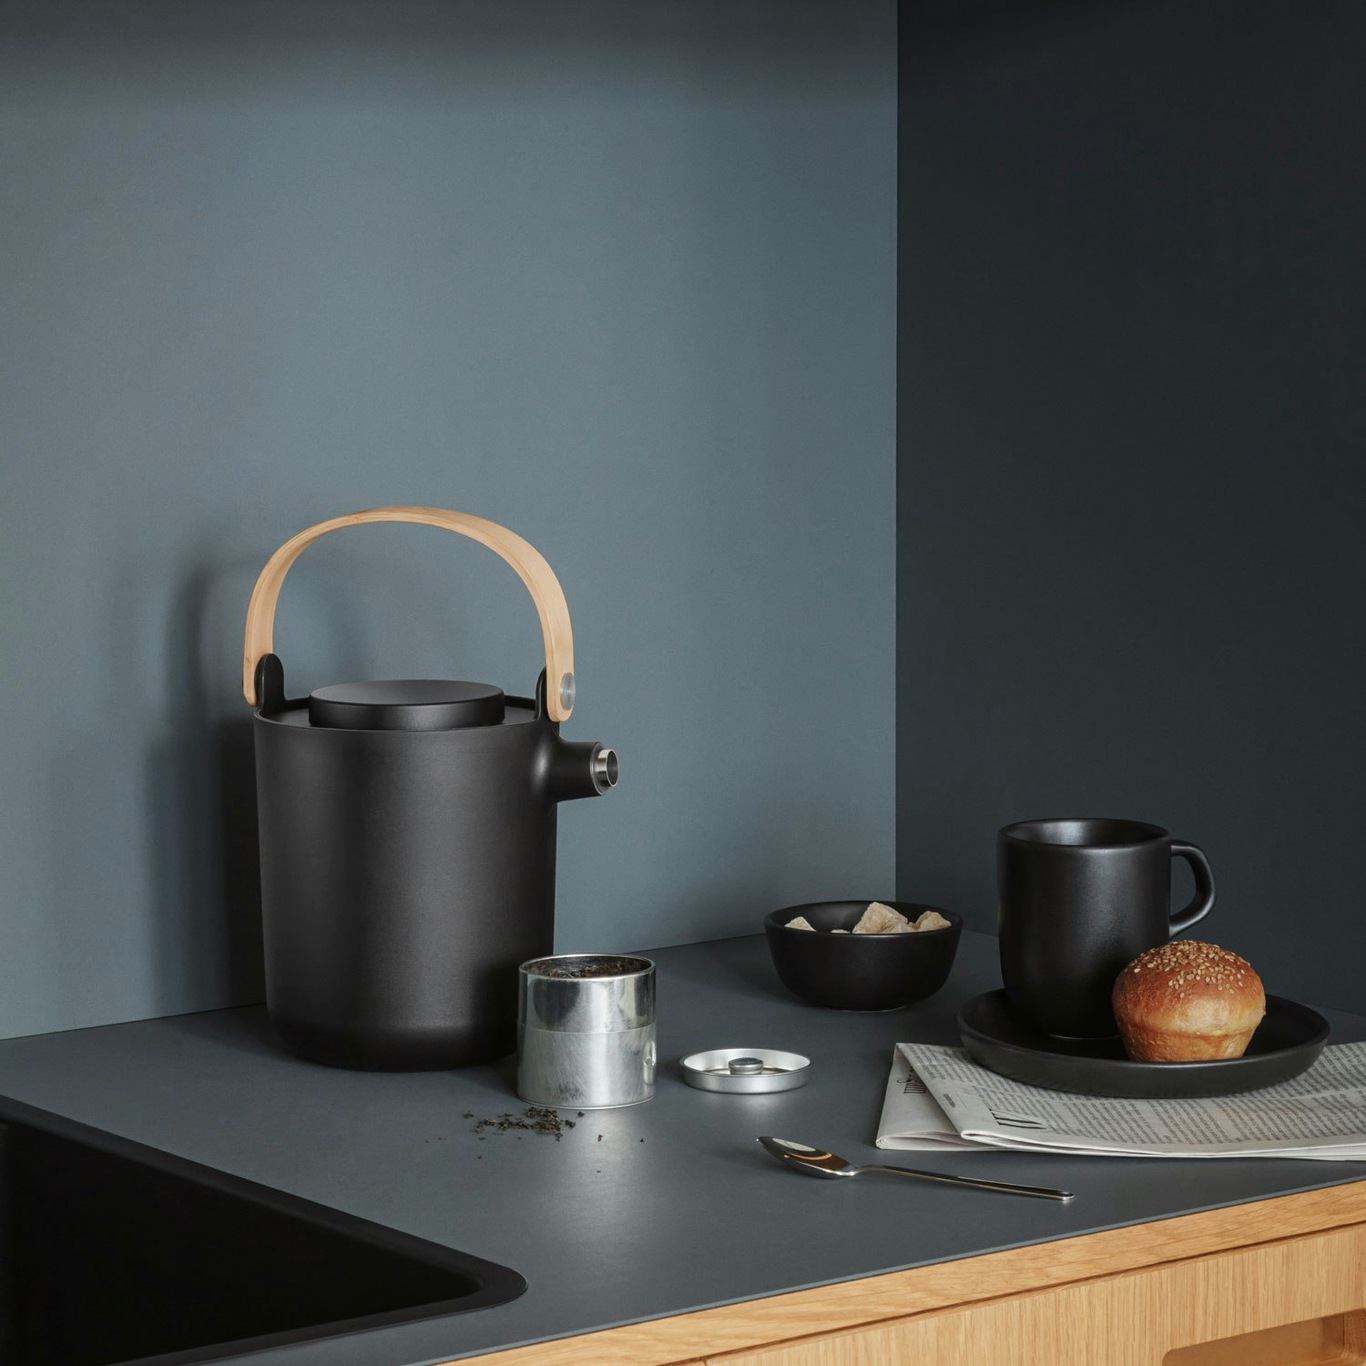 https://royaldesign.com/image/2/eva-solo-nordic-kitchen-2?w=800&quality=80